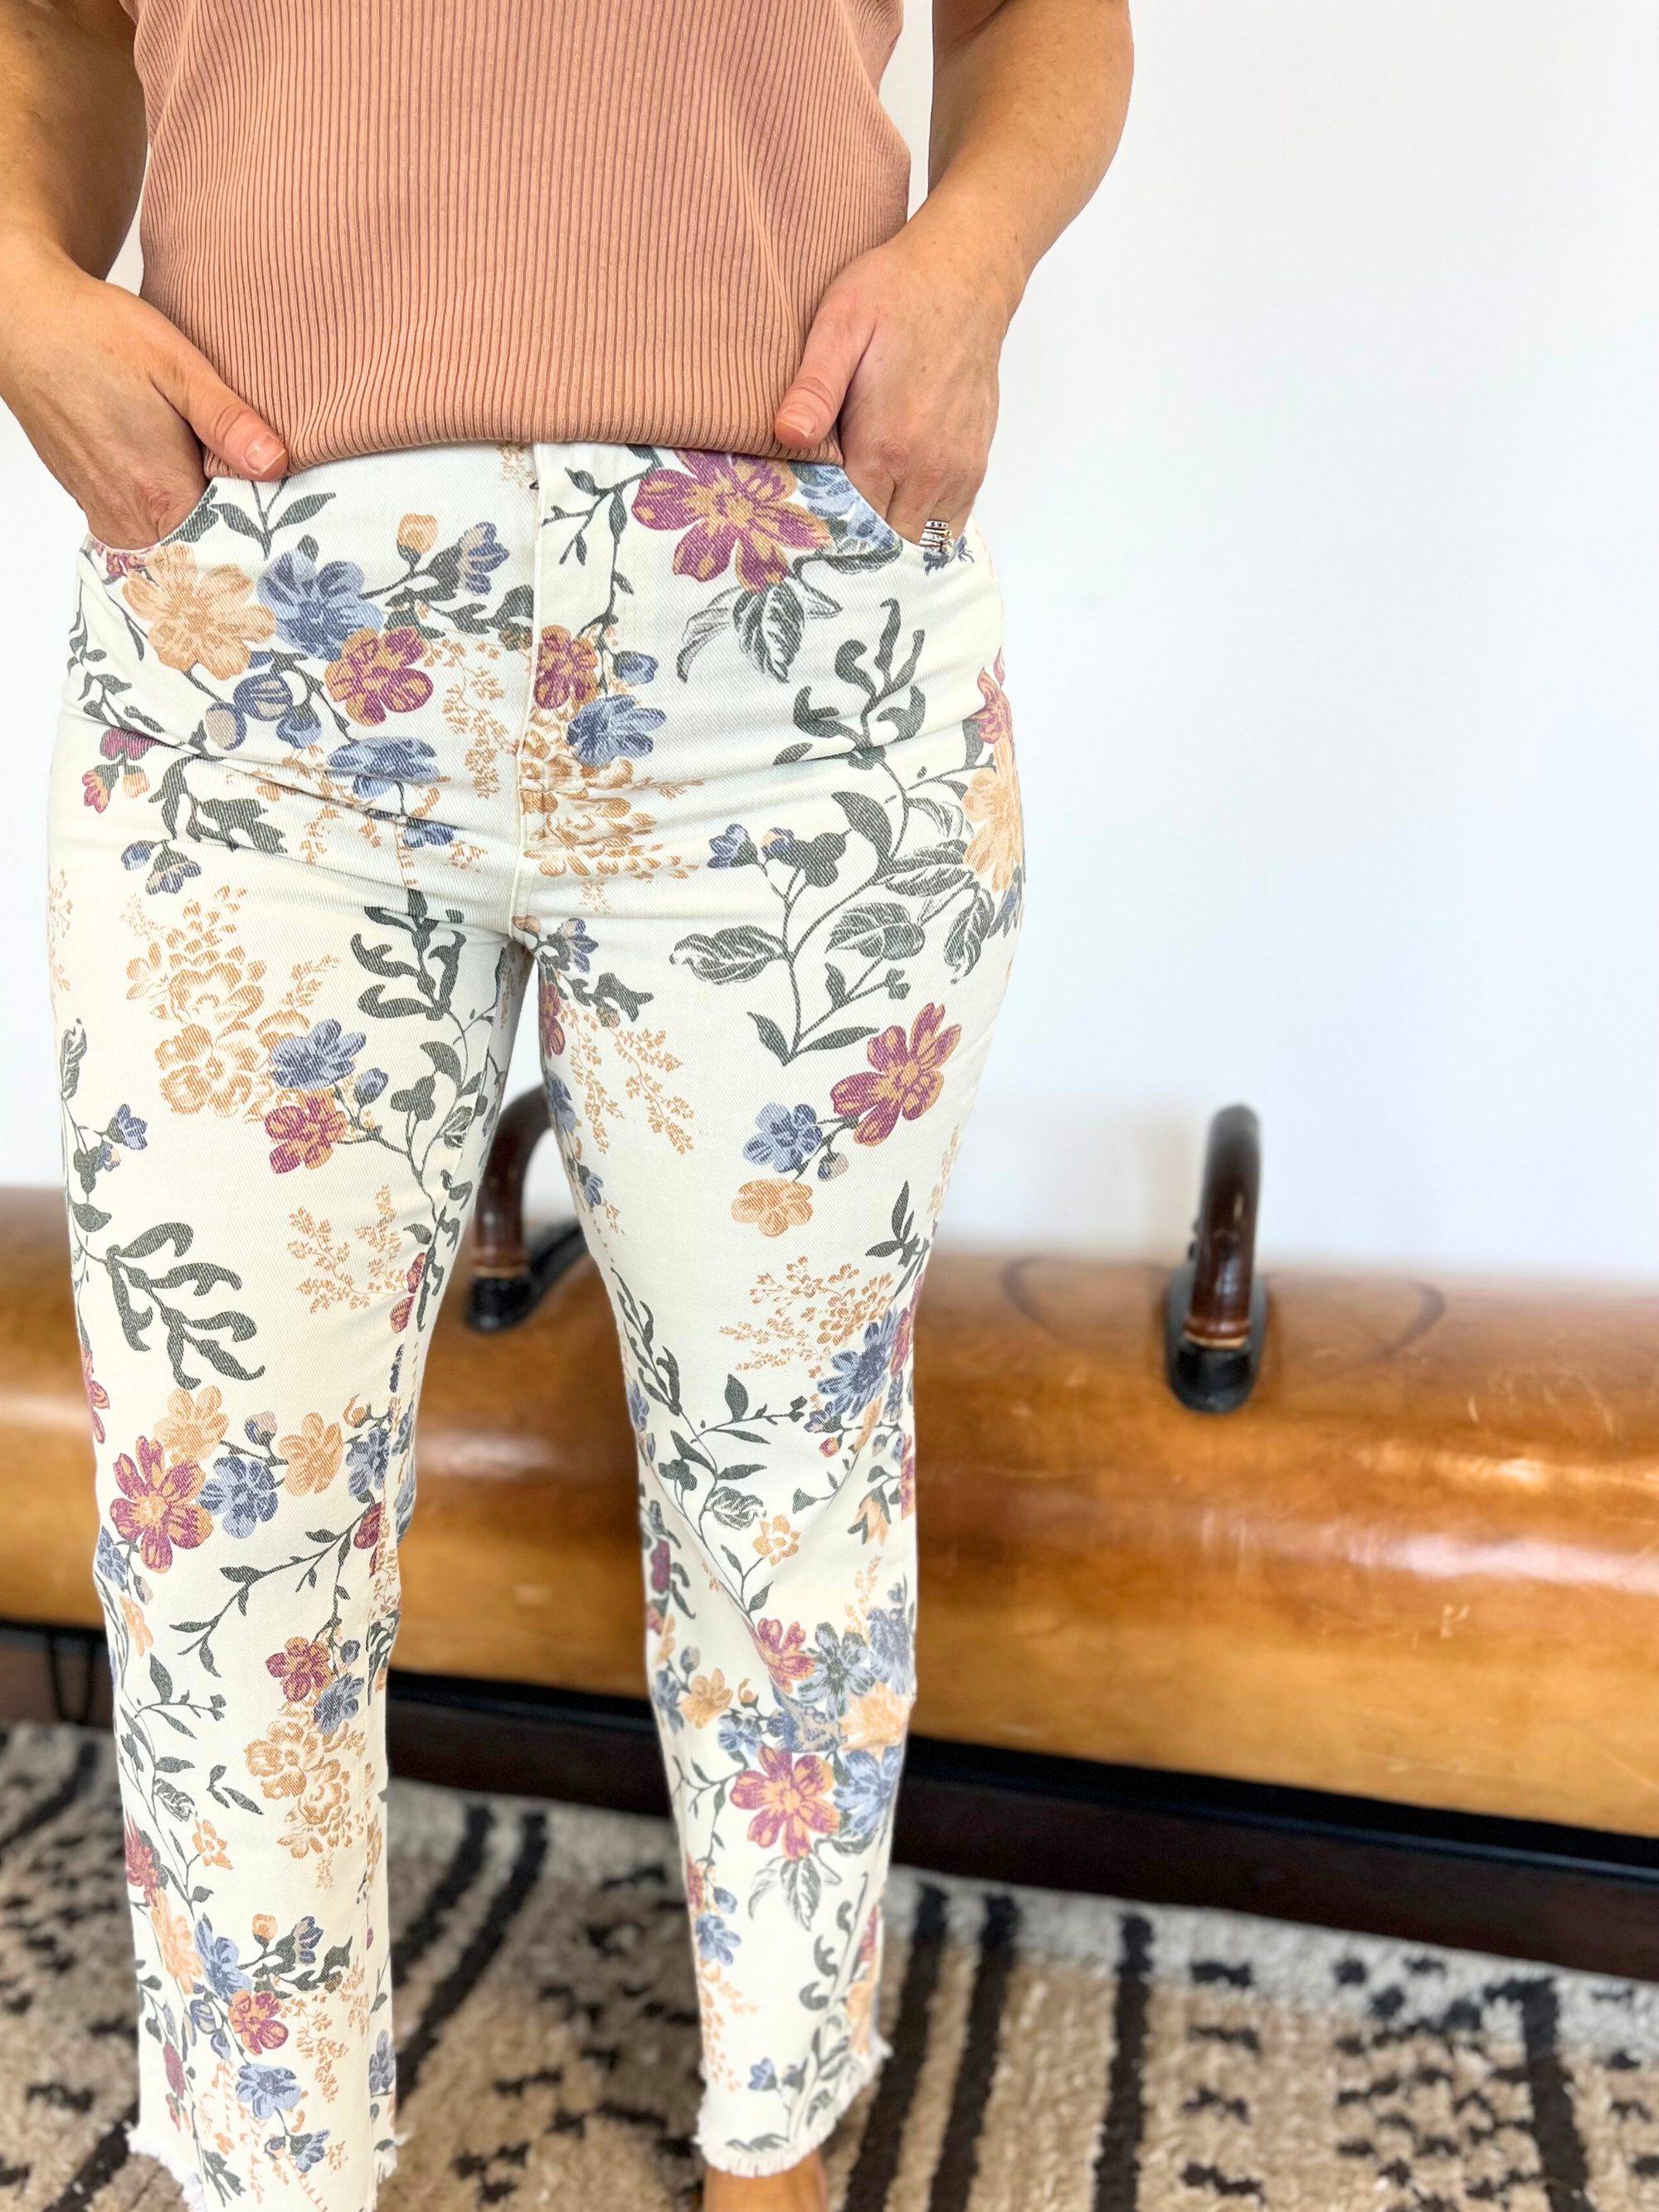 The Vintage Floral Denim Pants